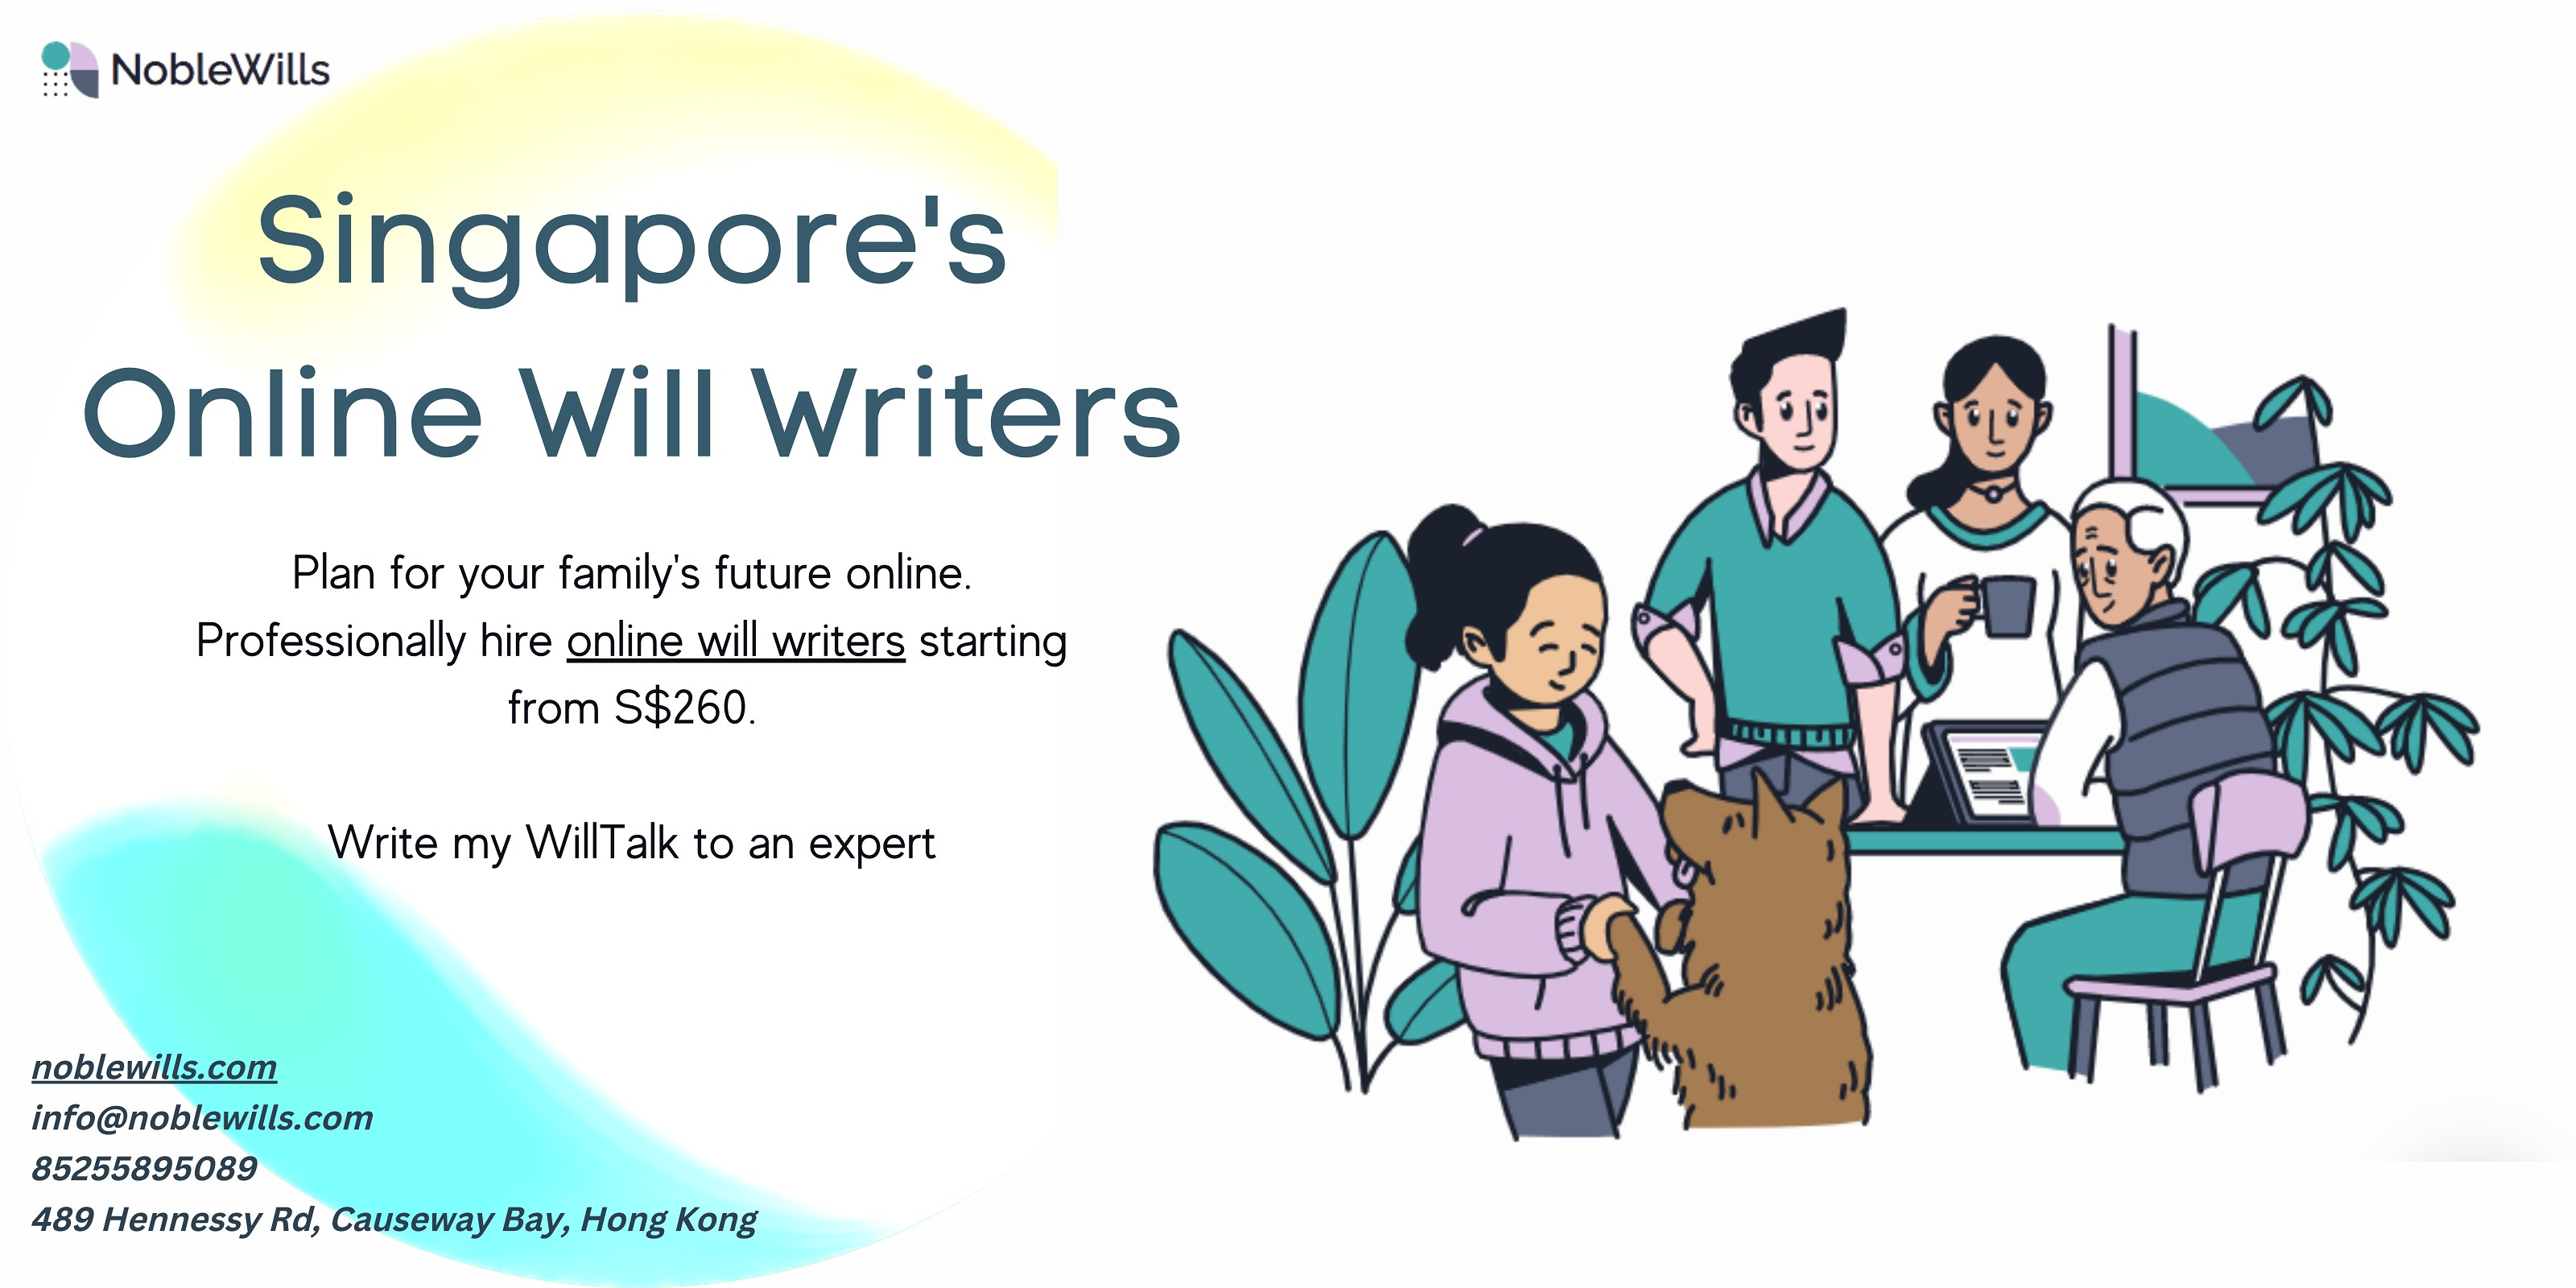 Singapore's Online Will Writers | NobleWills 